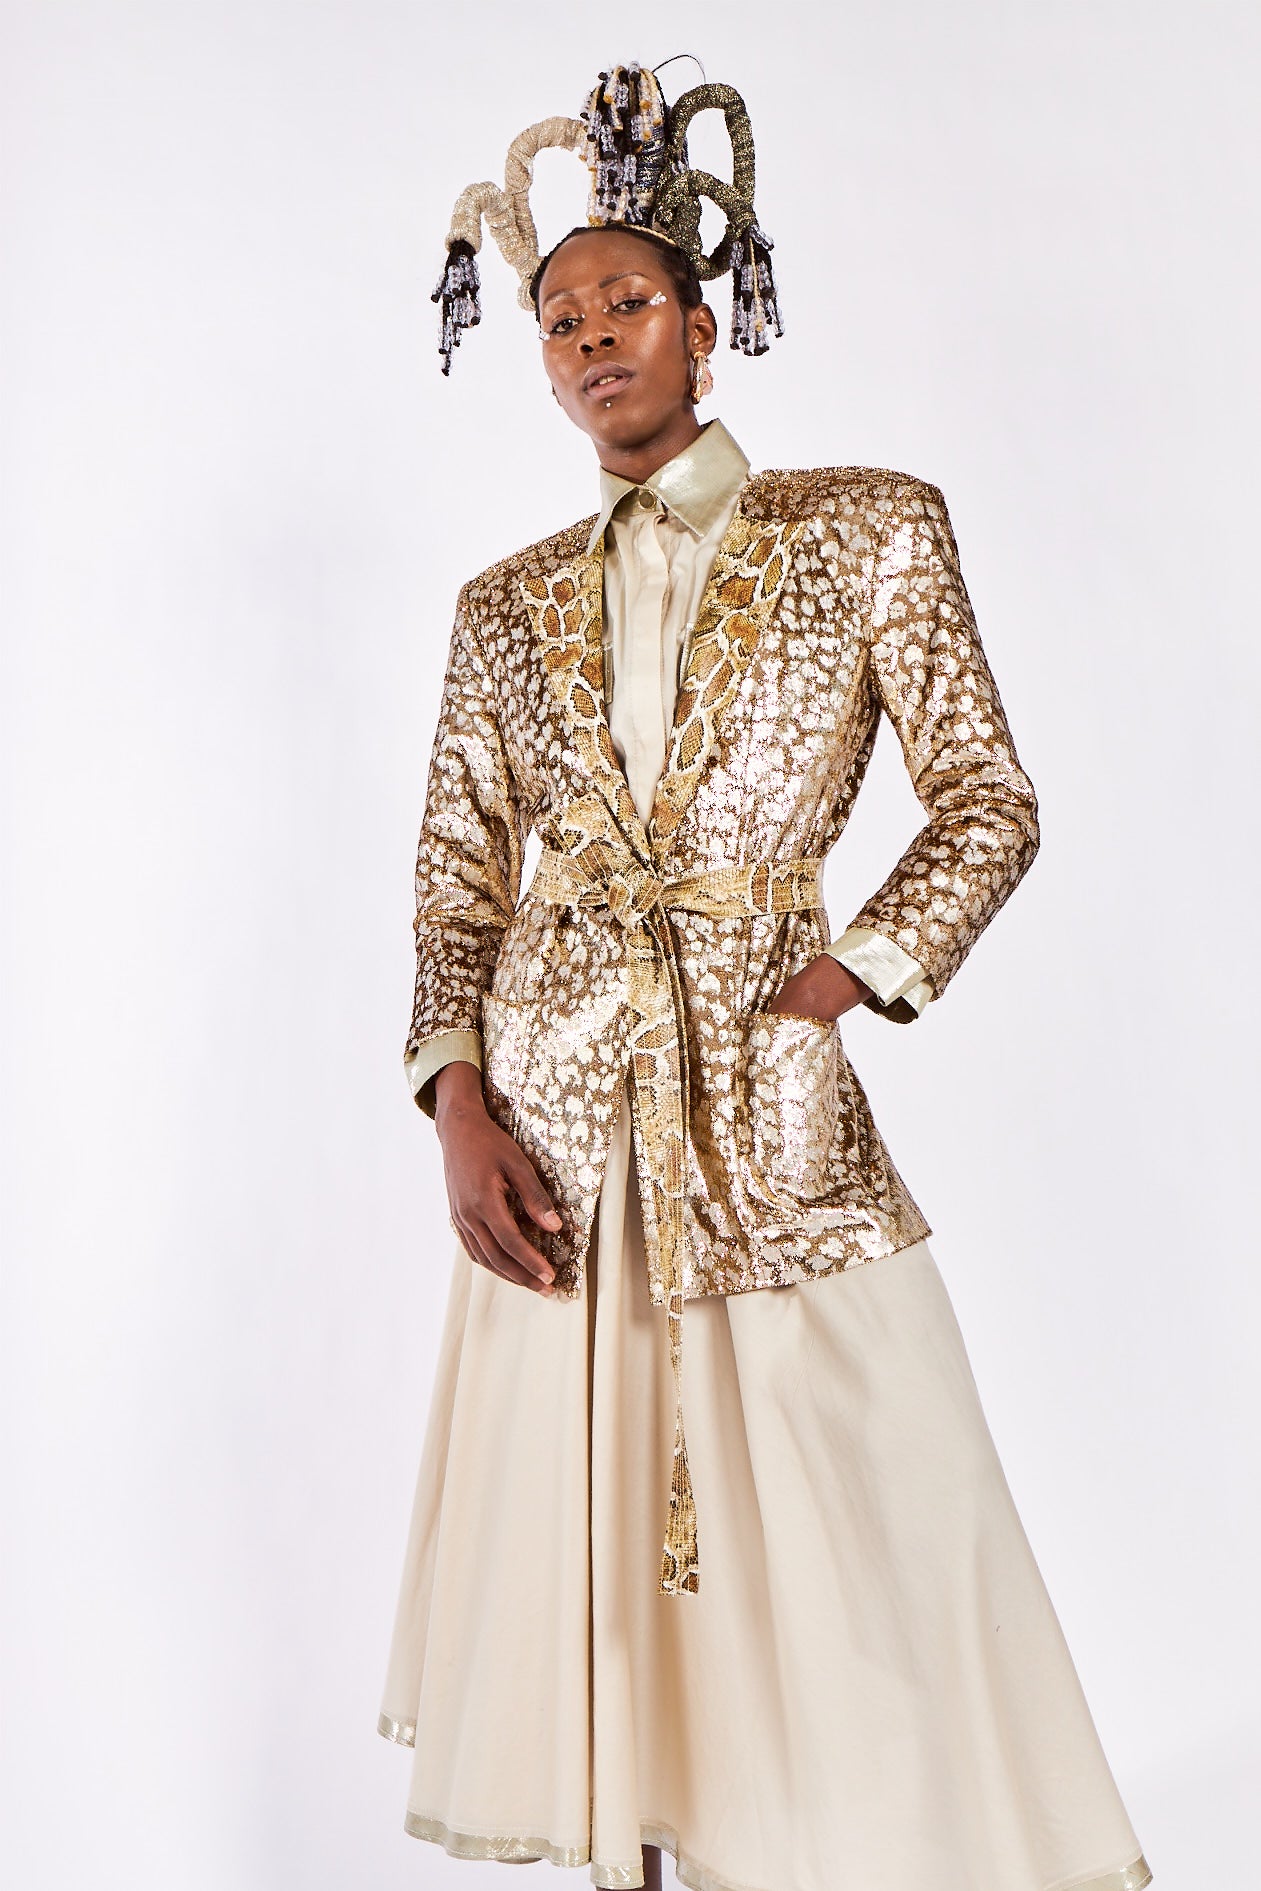 'Scintillating Gold' Vintage Lamé Tailored Jacket